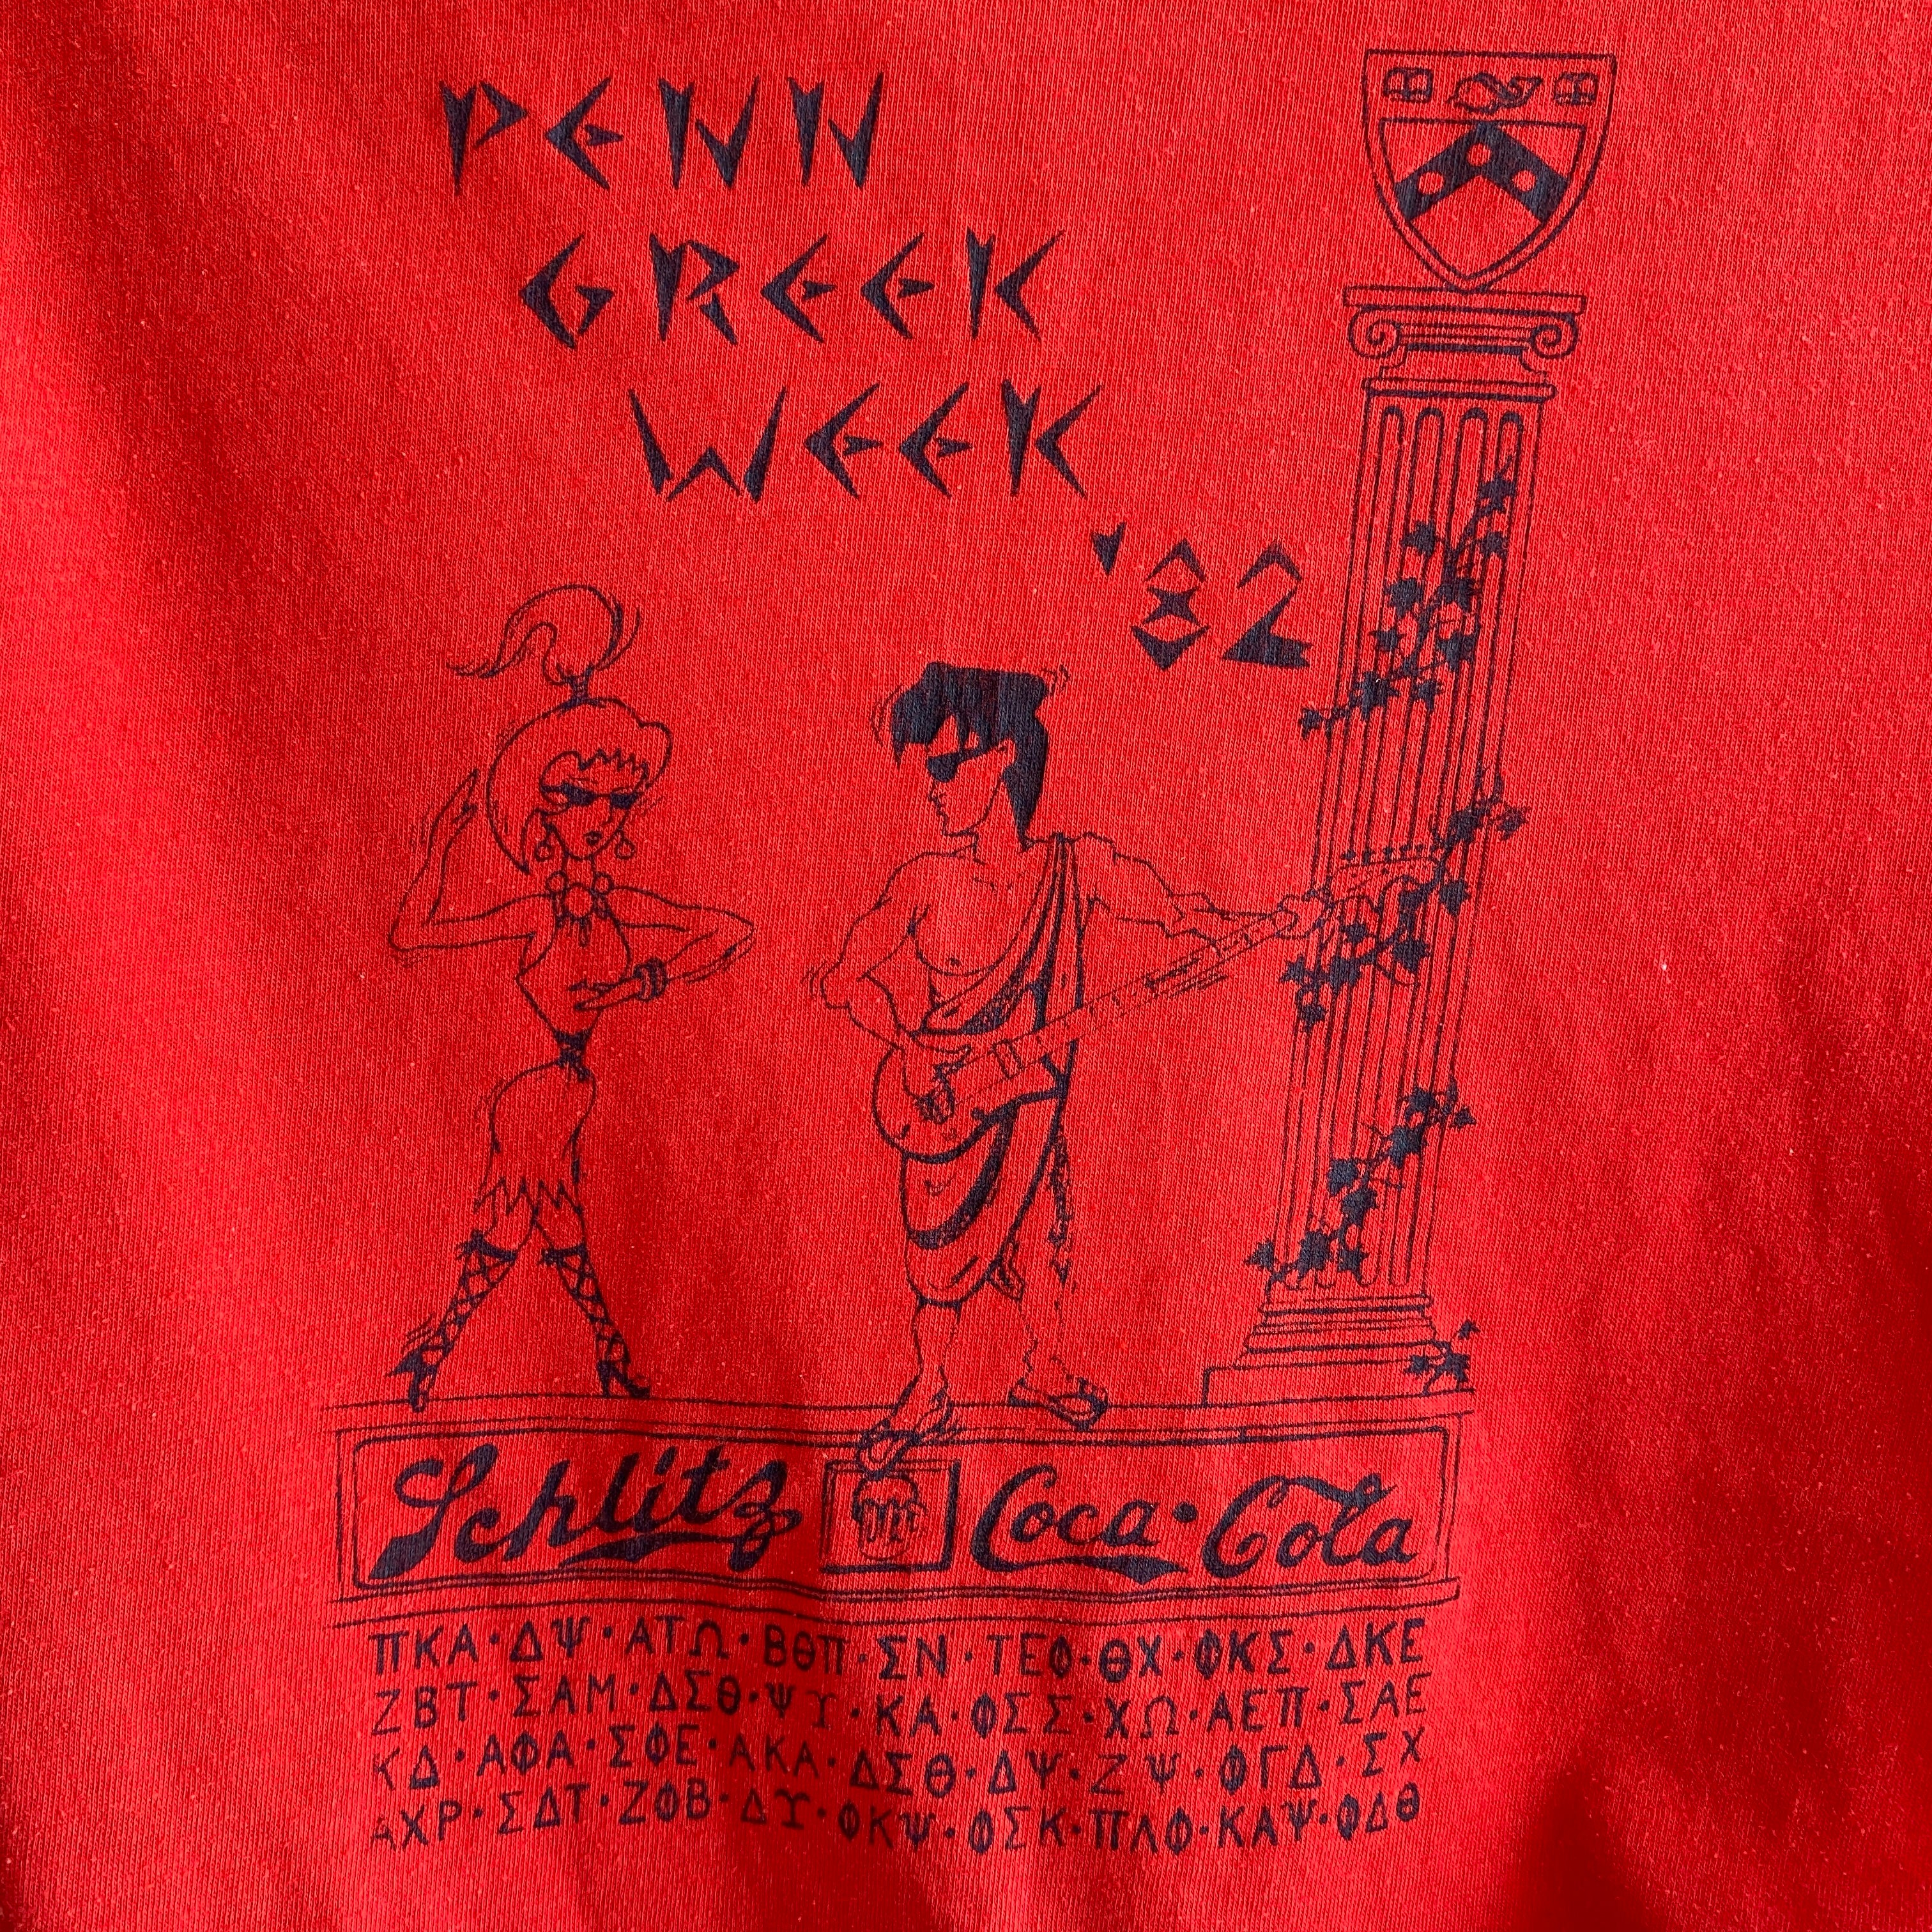 1982 Penn Greek Week EPPPPPIC Graphic T-Shirt